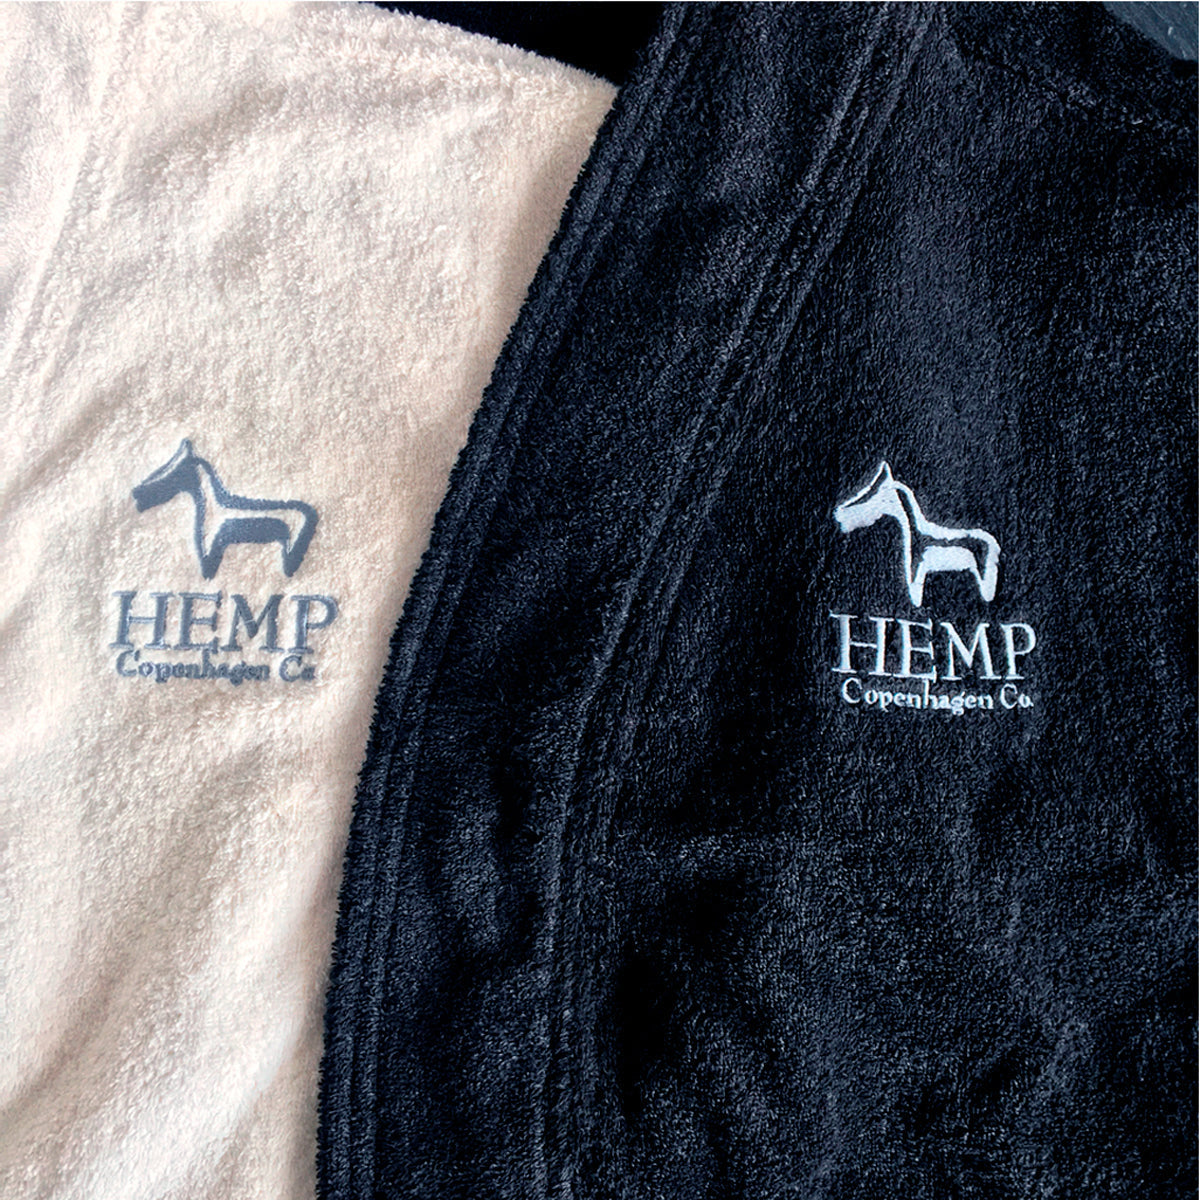 Hemp Copenhagen Co. Bathrobe 100% Hemp Natural White | Hospitality